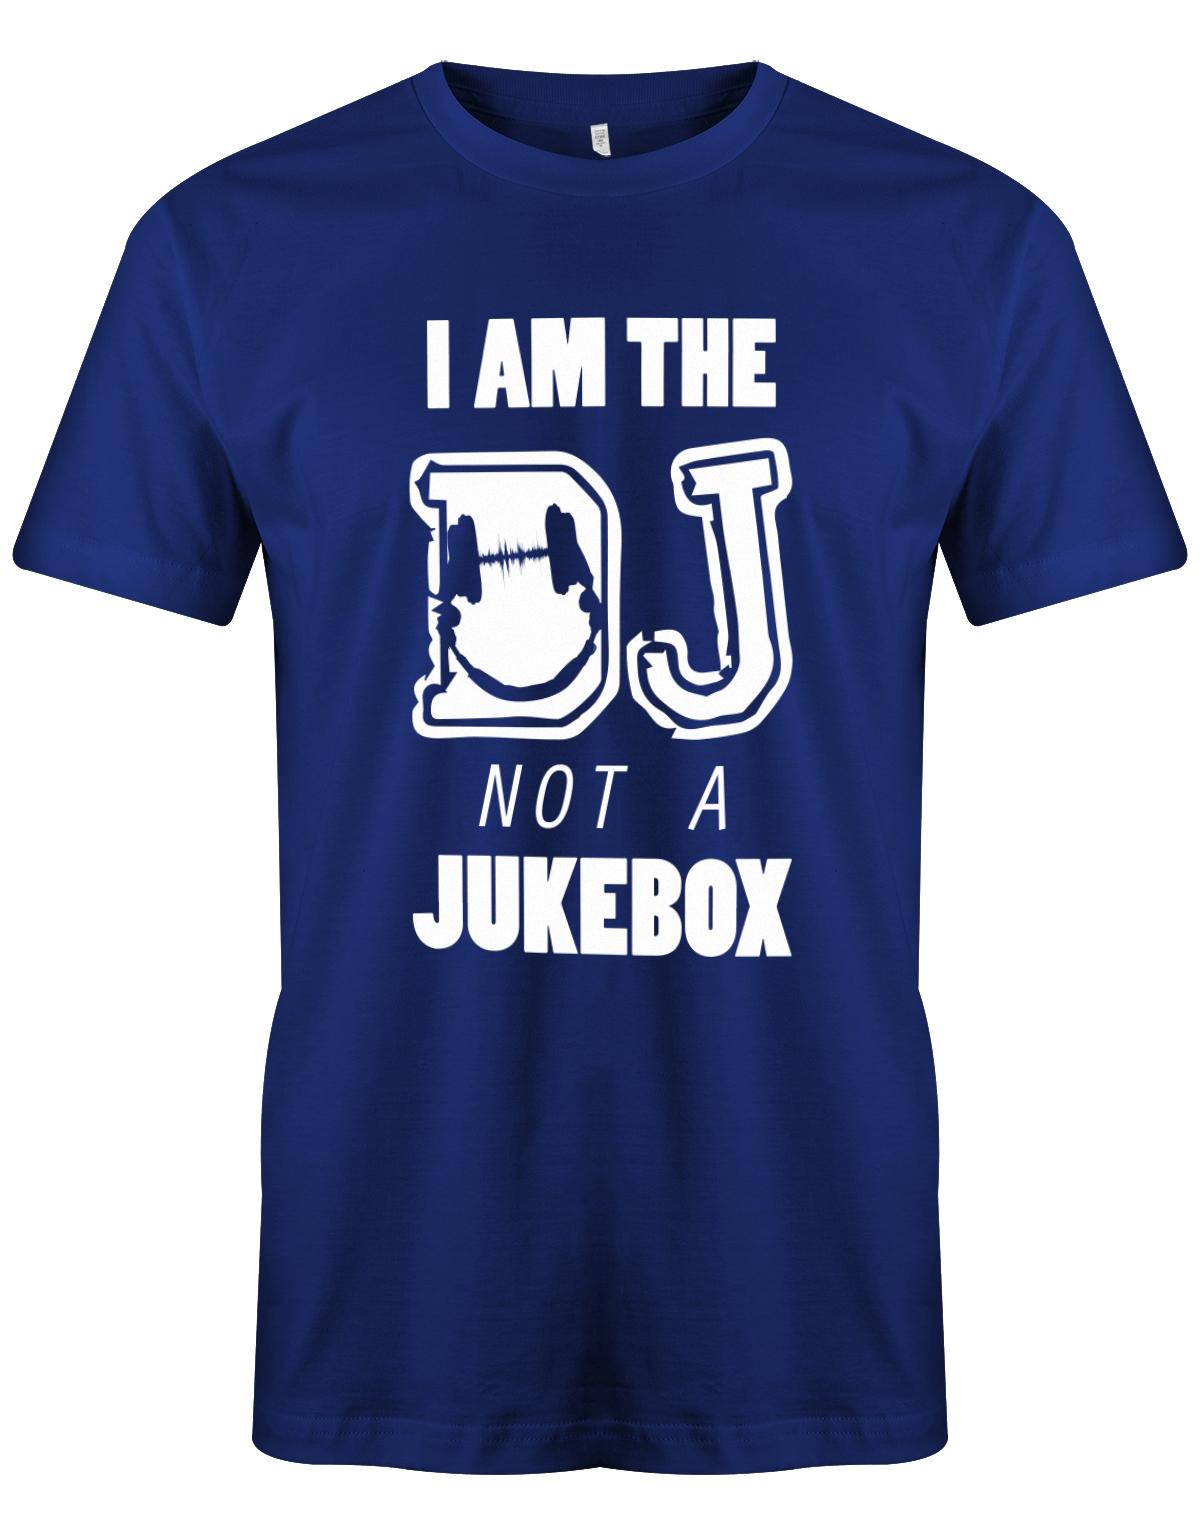 I-am-the-DJ-not-a-JUkebox-Herren-Royalblau